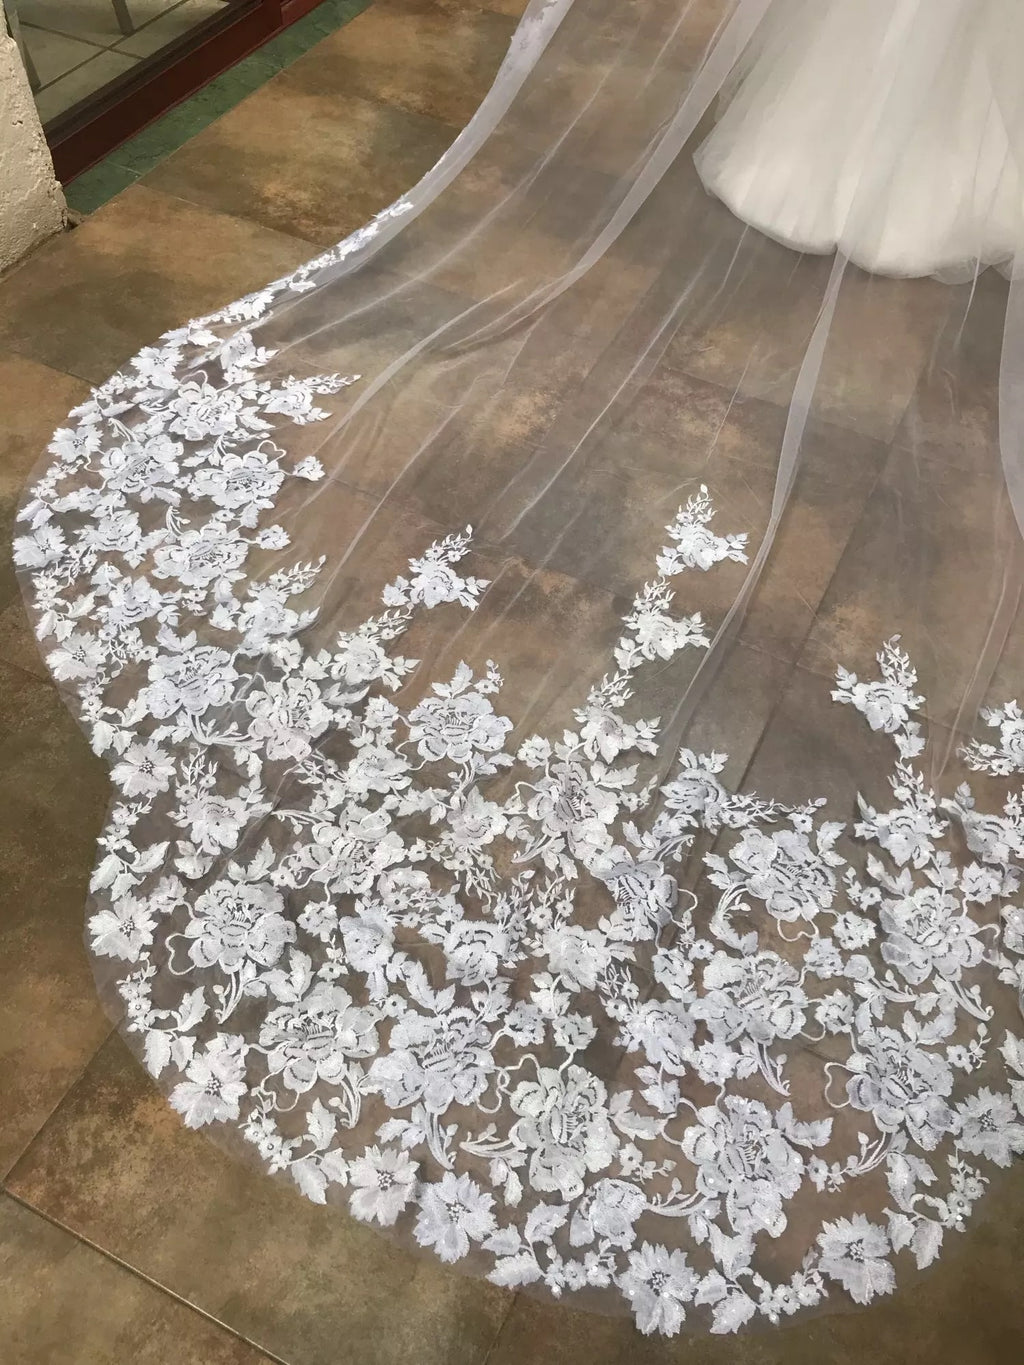 Venusvi Lace Edge Cathedral Length Tulle Wedding Bridal Veil+Comb